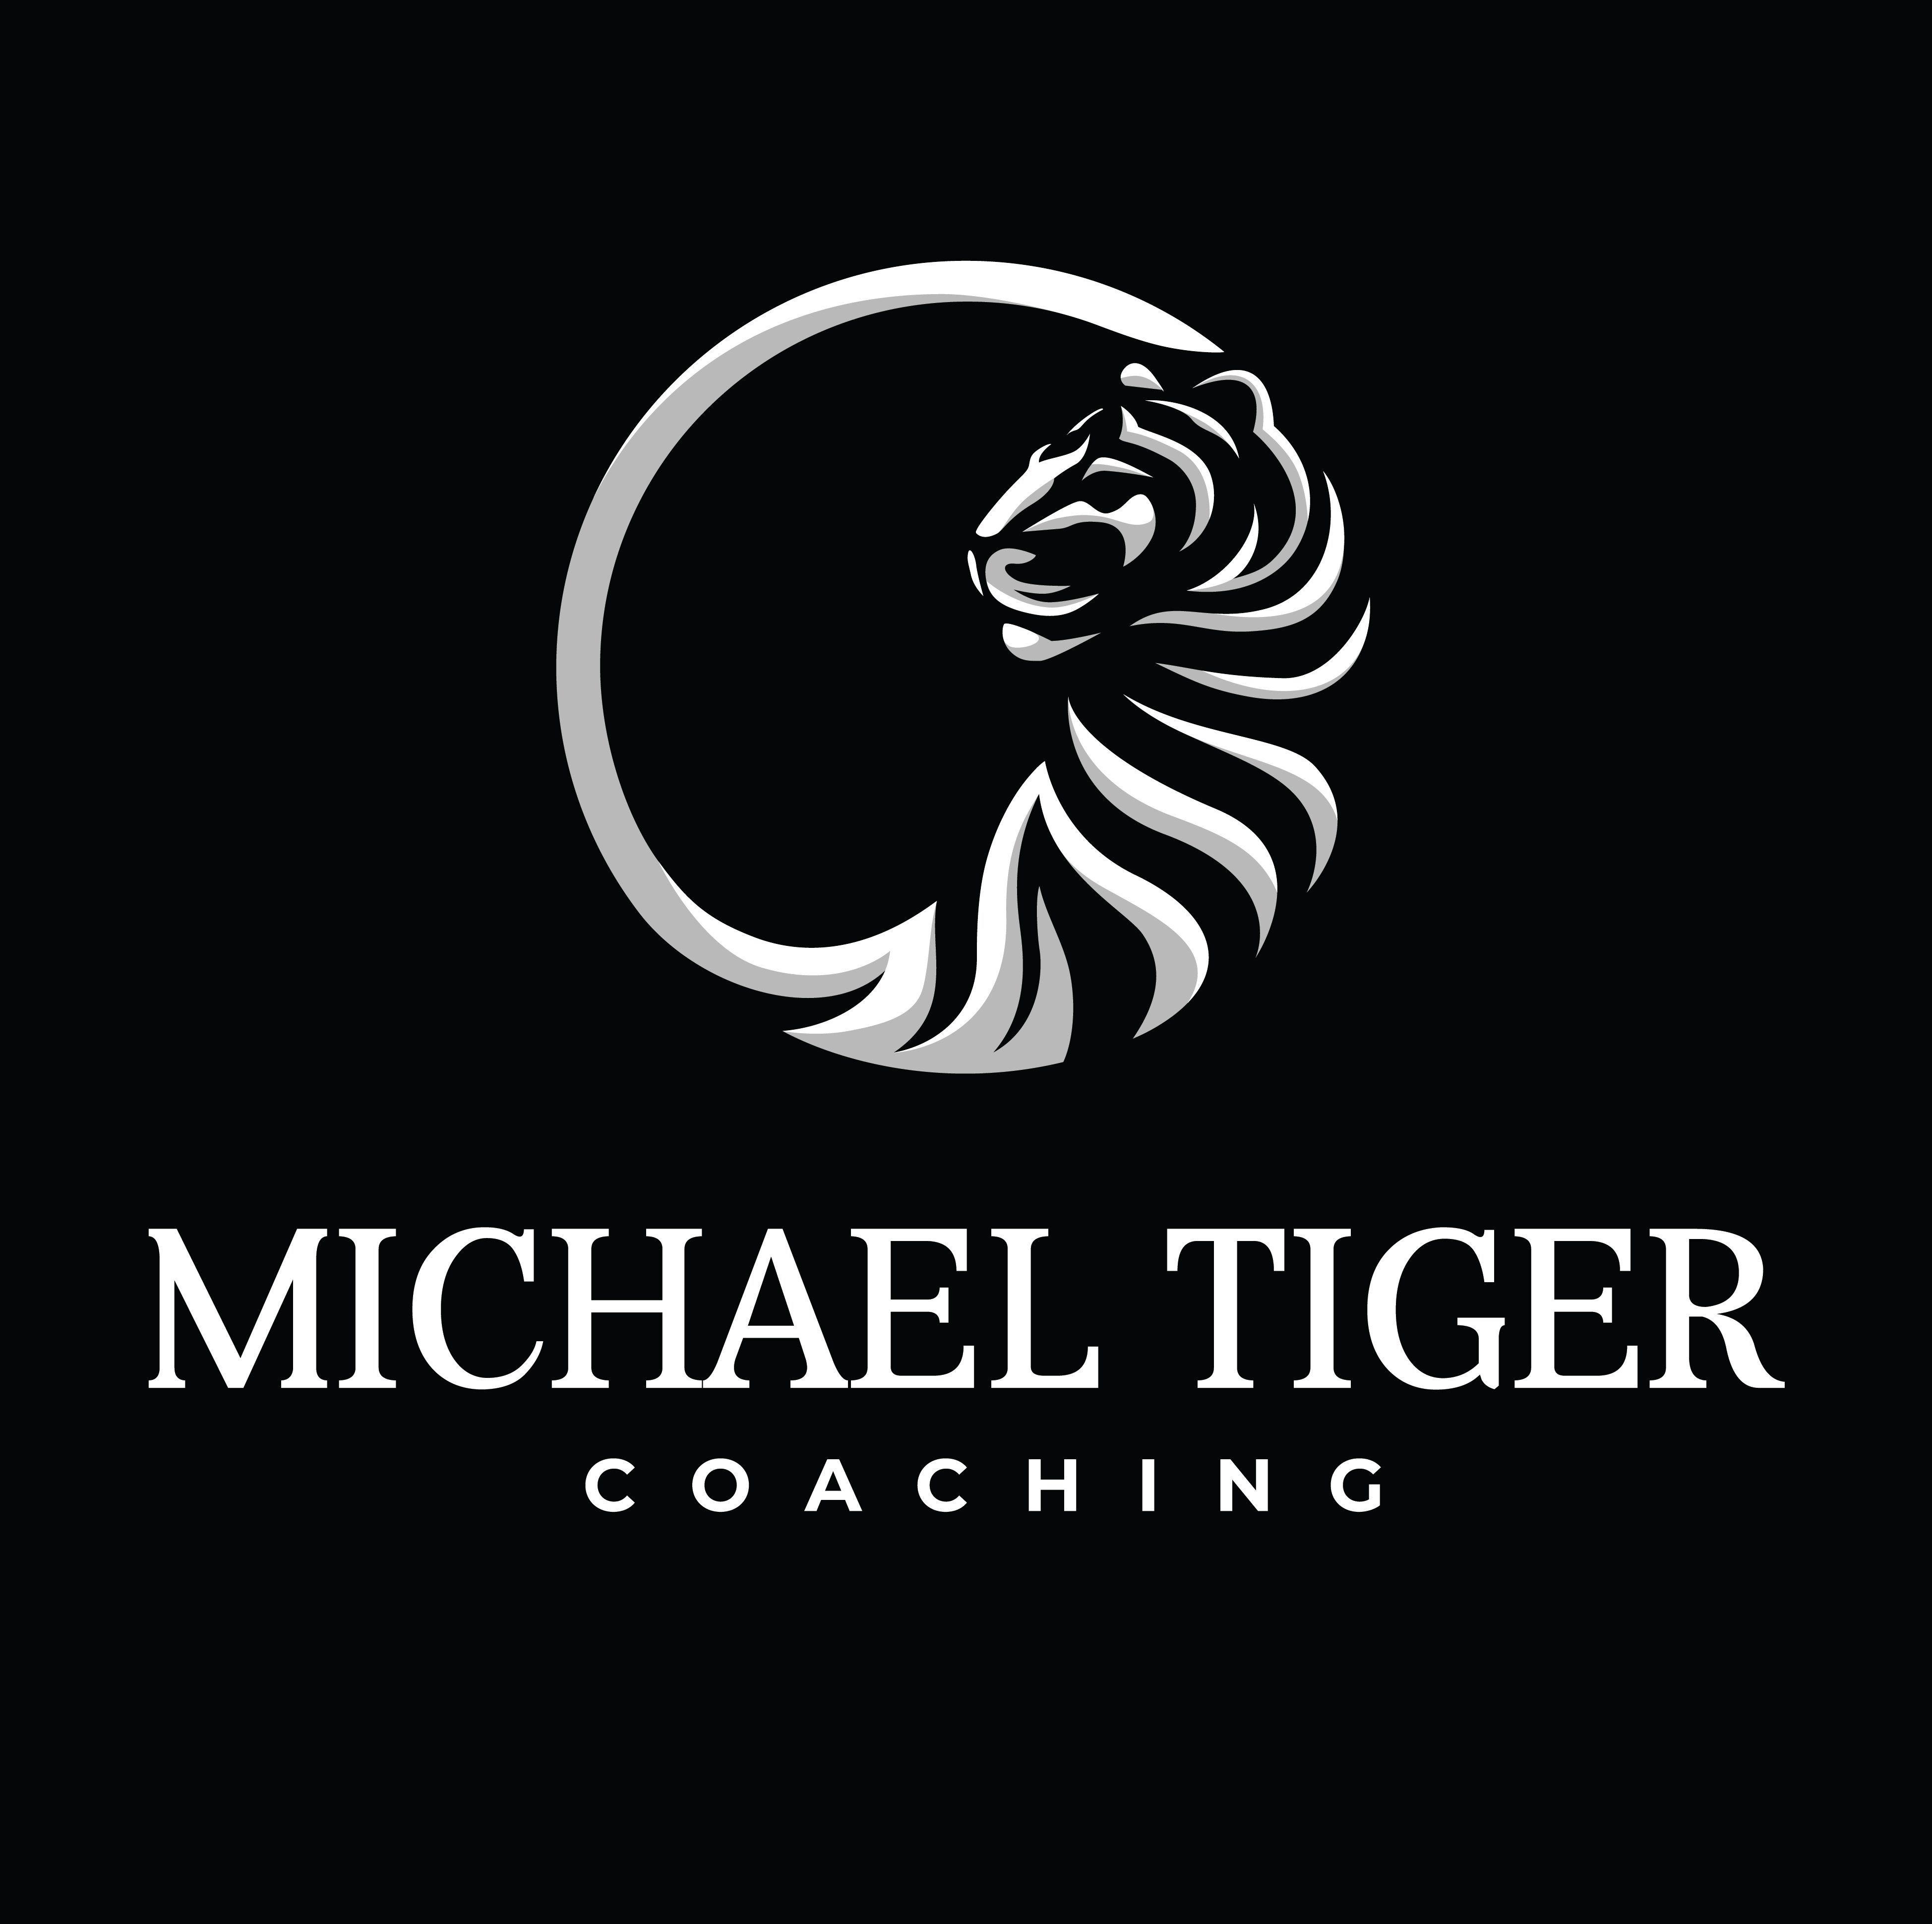 Michael Tiger Coaching, LLC